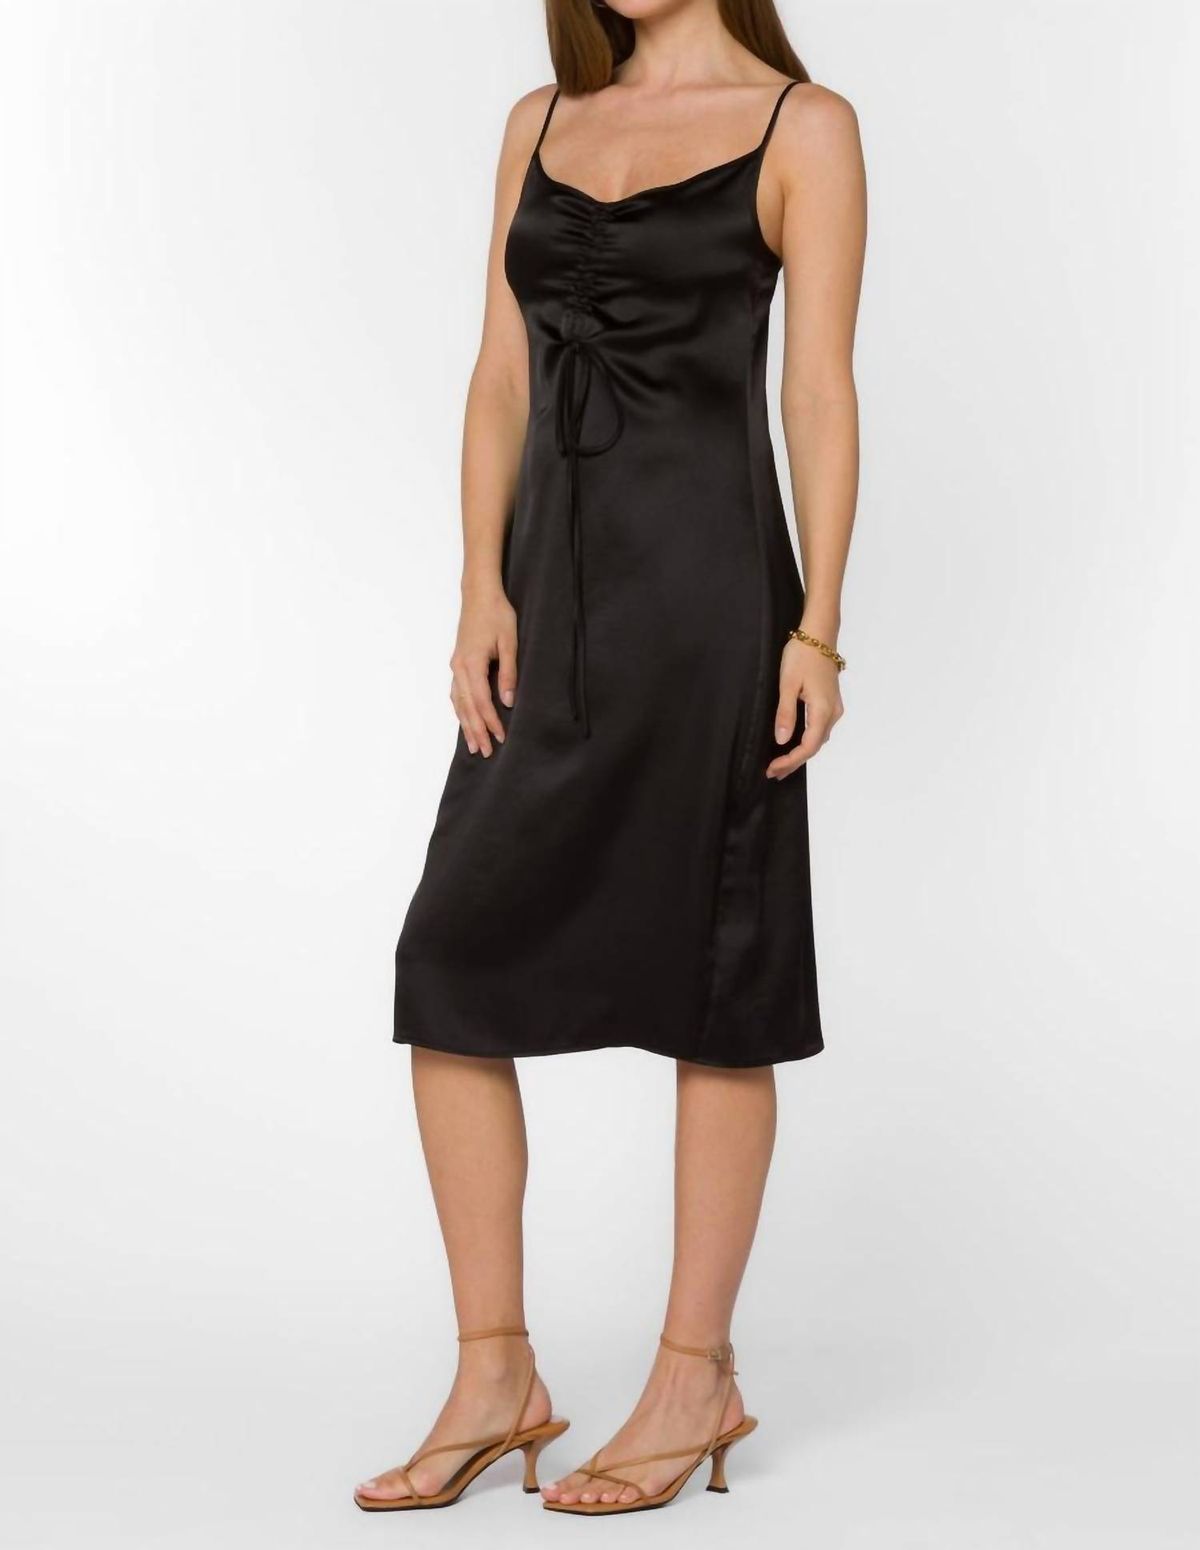 Style 1-2605148259-3236 Velvet Heart Size S Black Cocktail Dress on Queenly